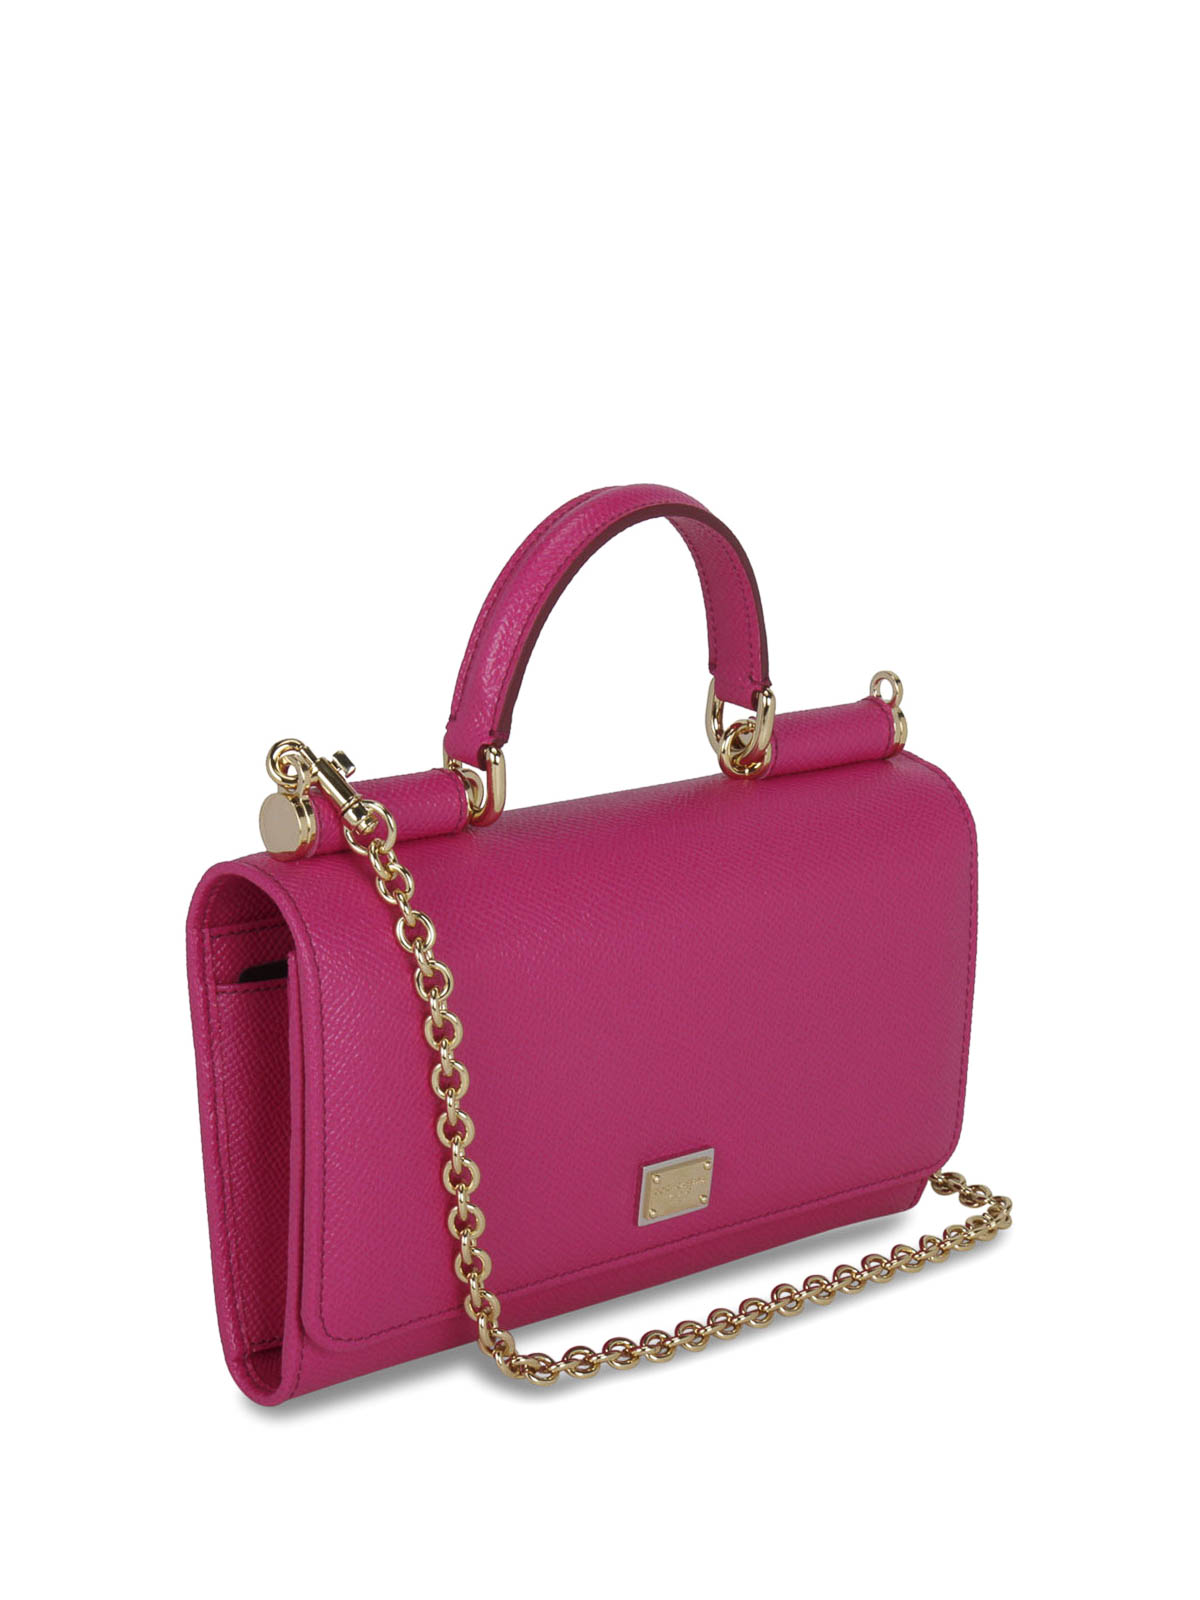 Dolce & Gabbana Hot Pink Leather Small Miss Sicily Shoulder Bag